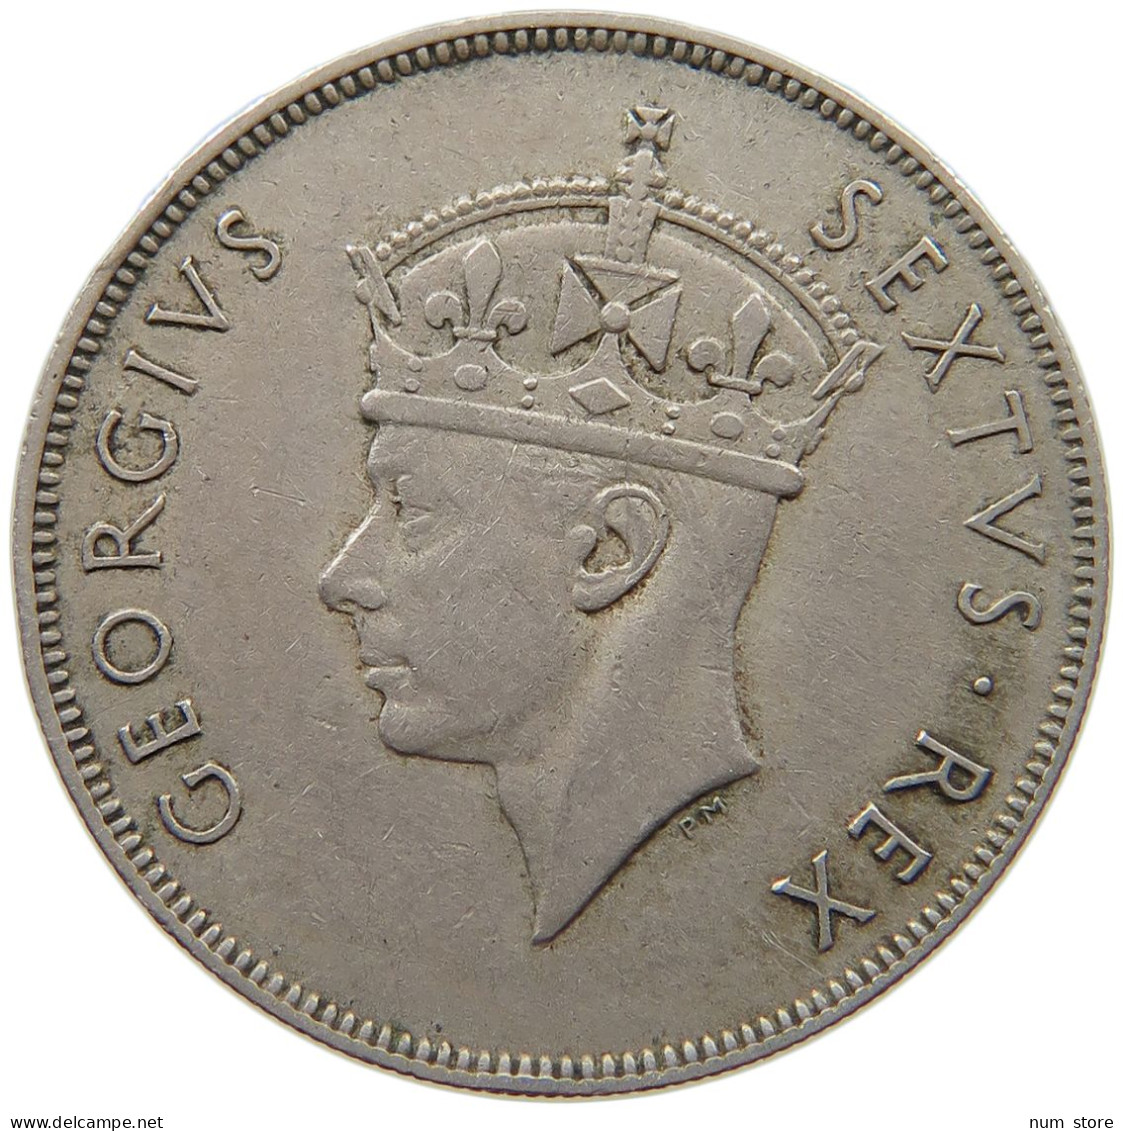 EAST AFRICA SHILLING 1949 George VI. (1936-1952) #s039 0379 - Afrique Orientale & Protectorat D'Ouganda